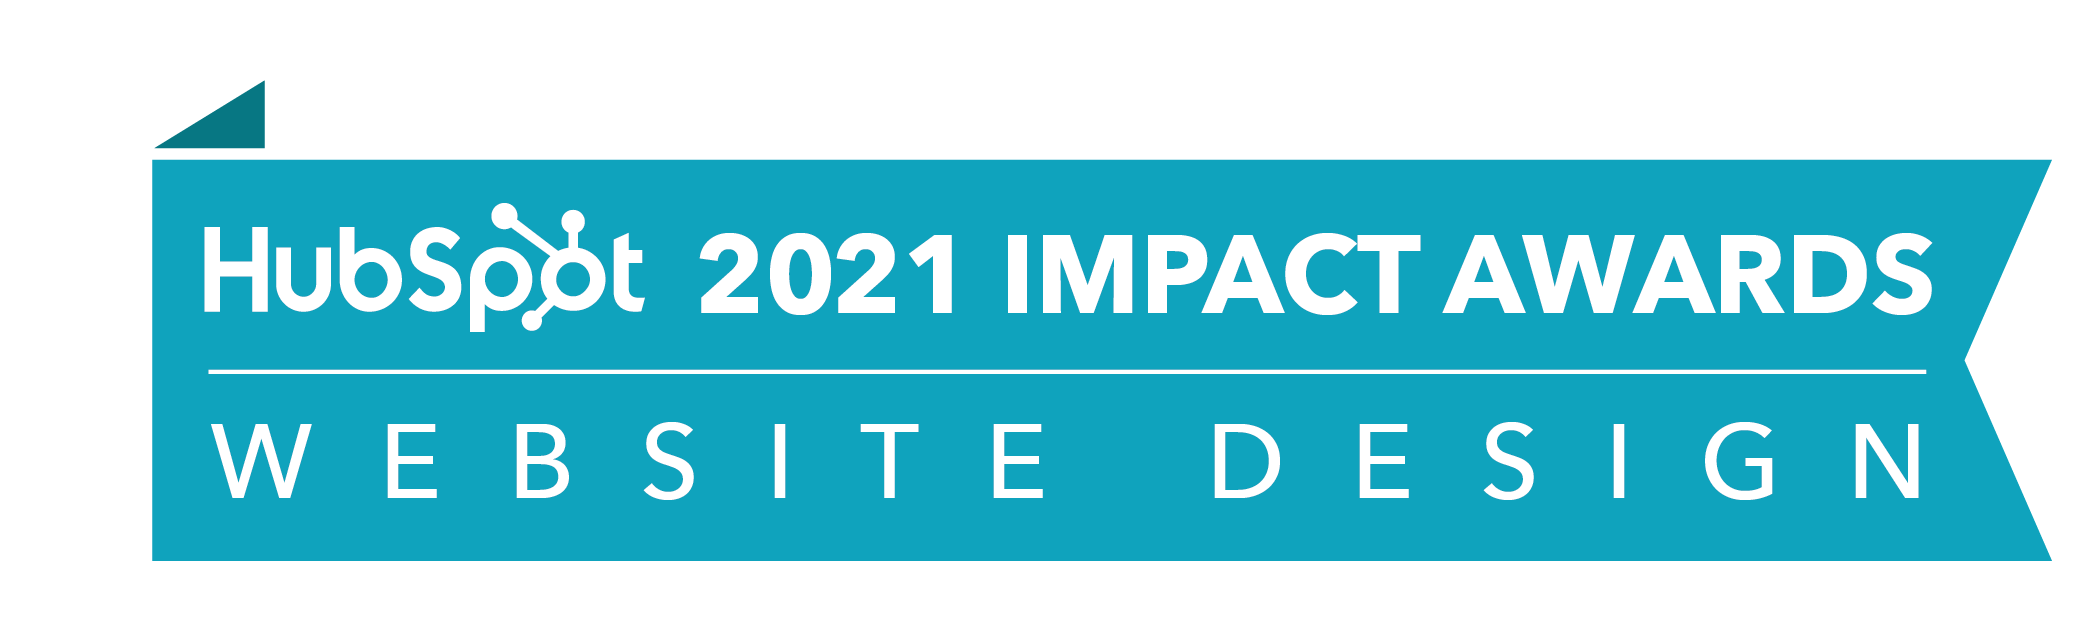 HubSpot_ImpactAwards_2021_WebsiteDesign2-1